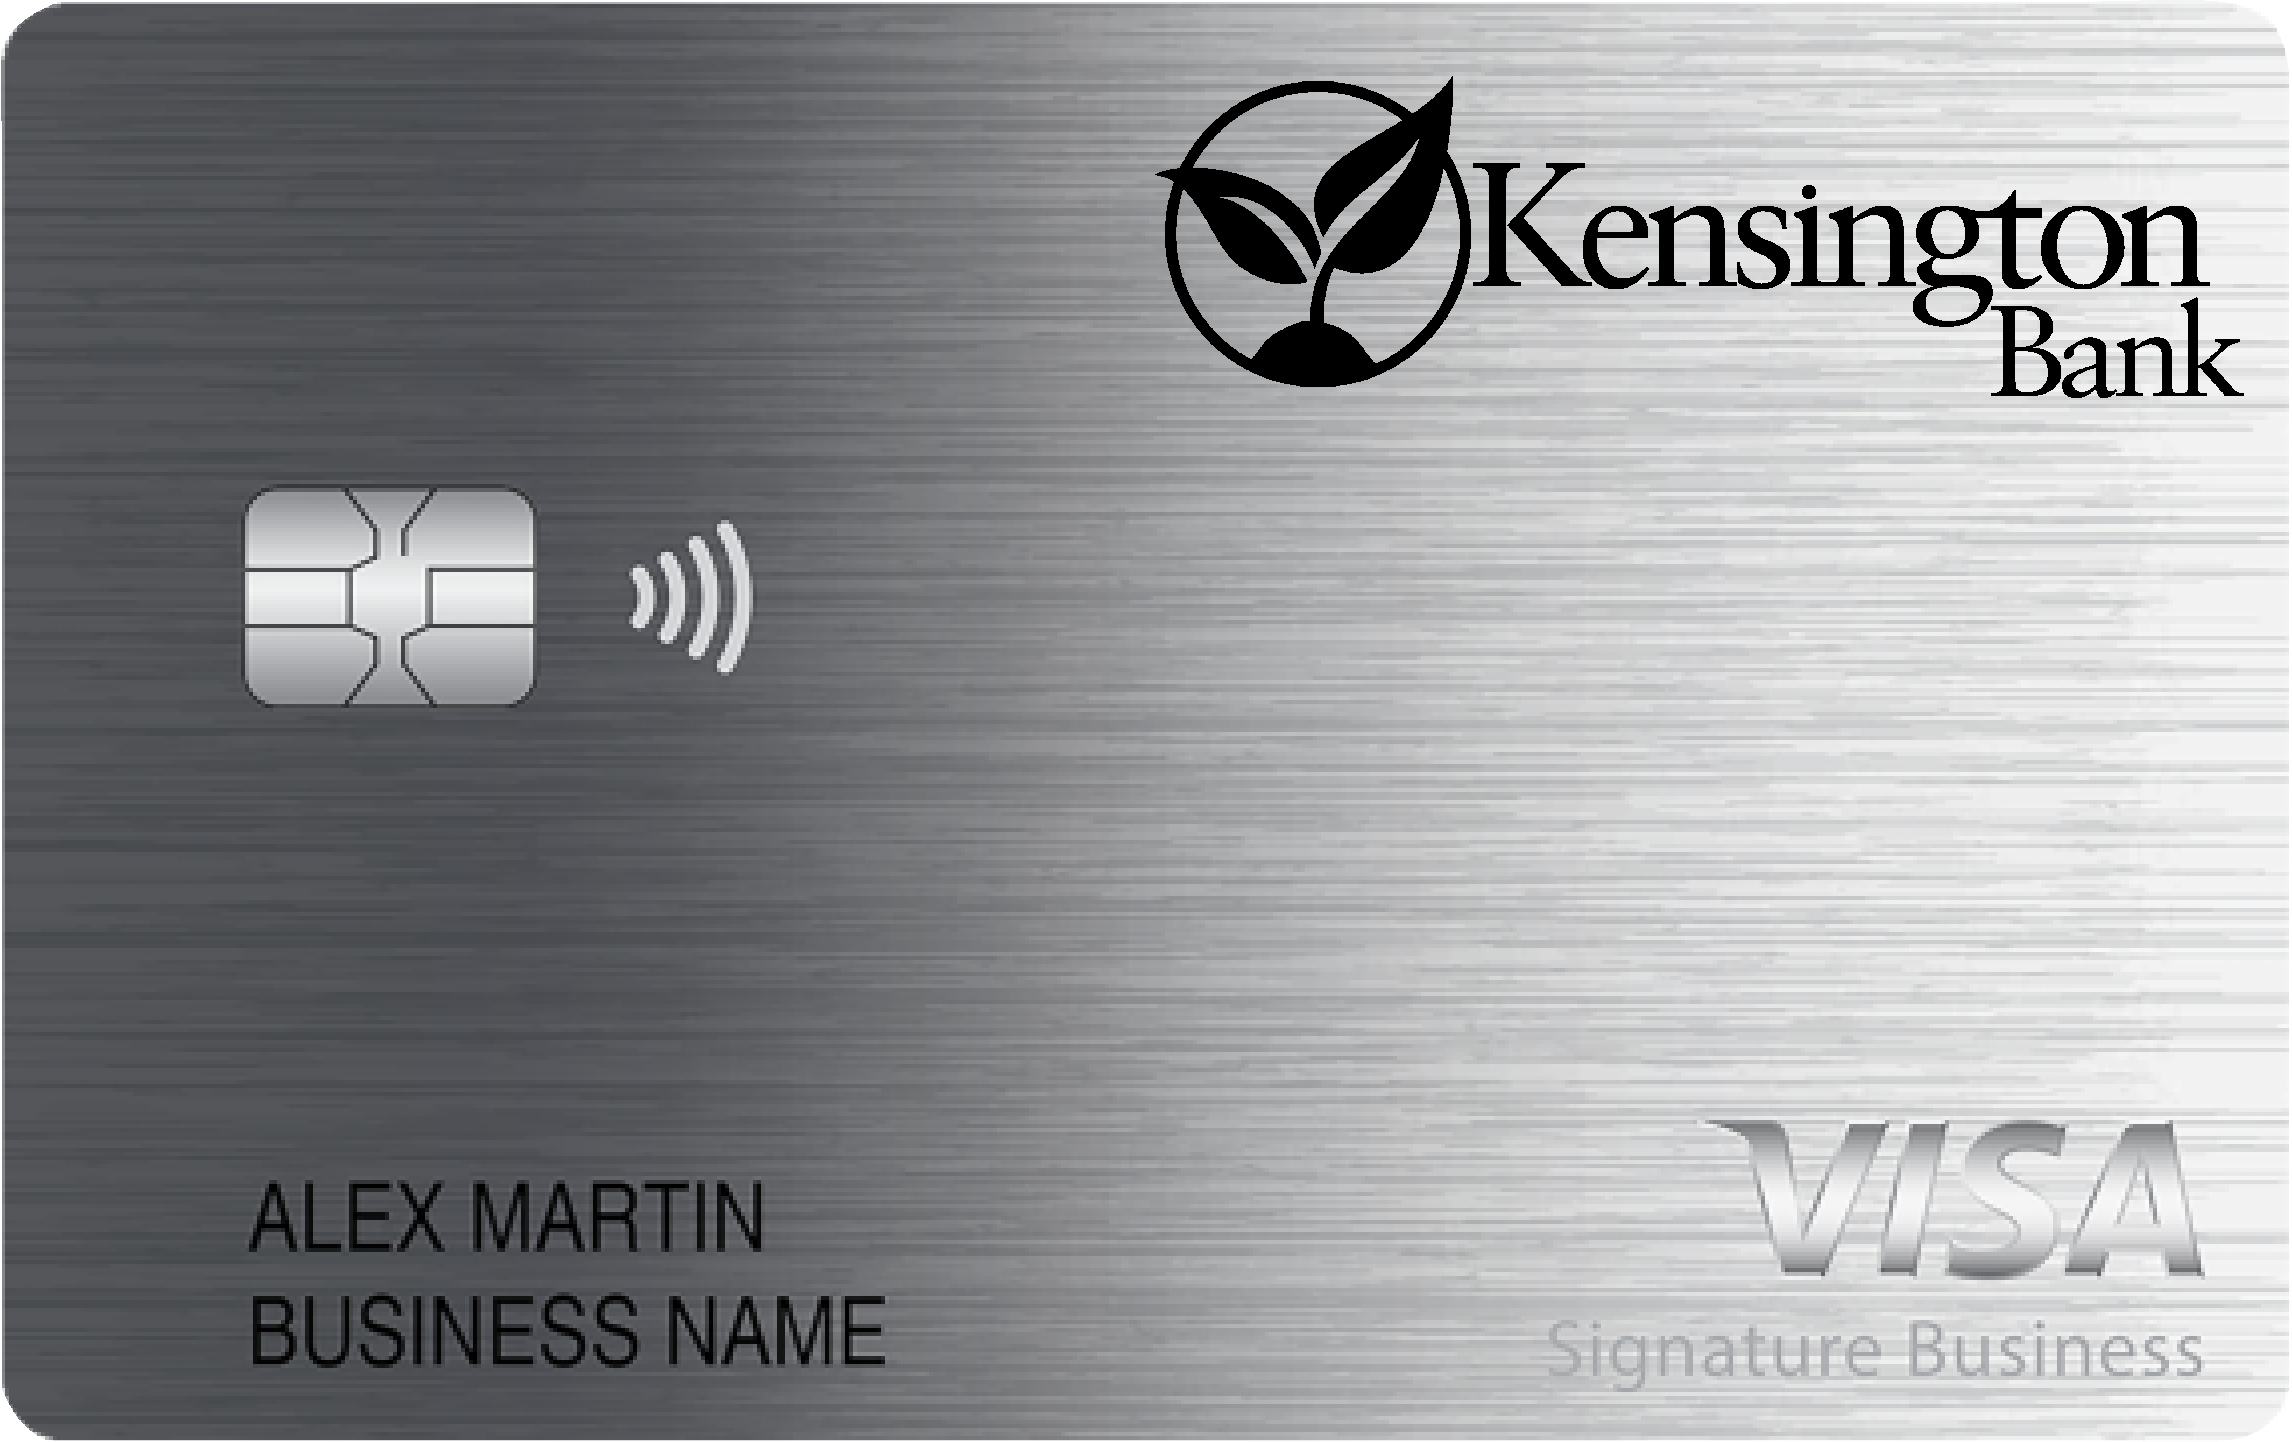 Kensington Bank Smart Business Rewards Card